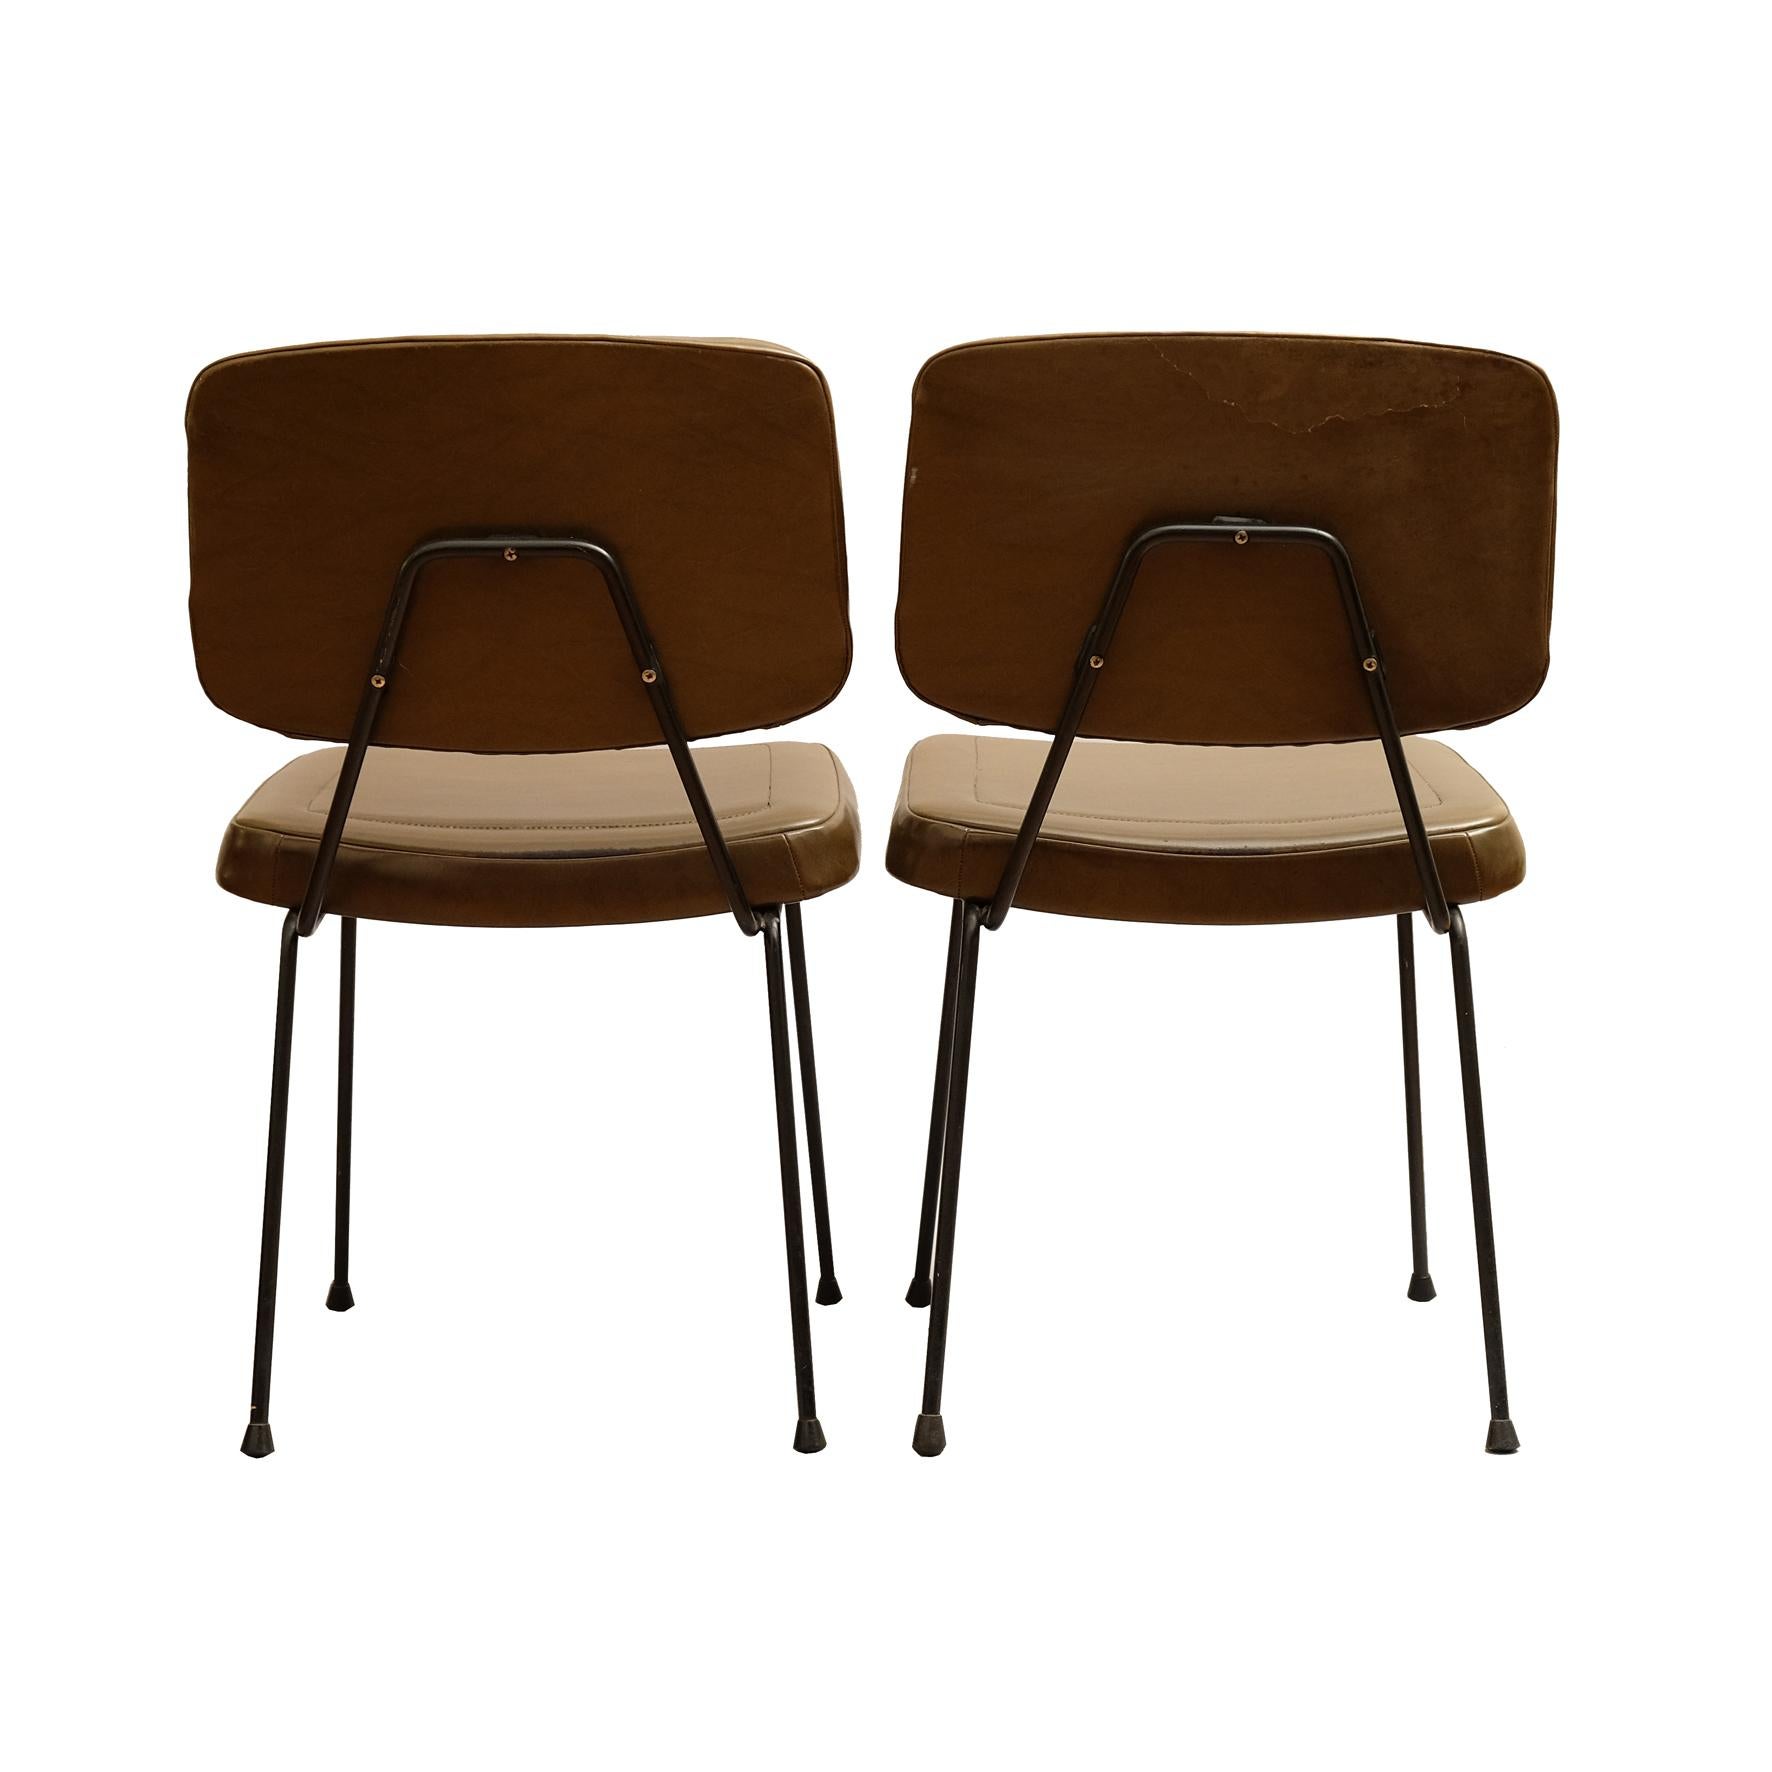 Pierre Paulin, a Pair of Chairs, Model CM 196, Thonet, 1960s (Französisch)